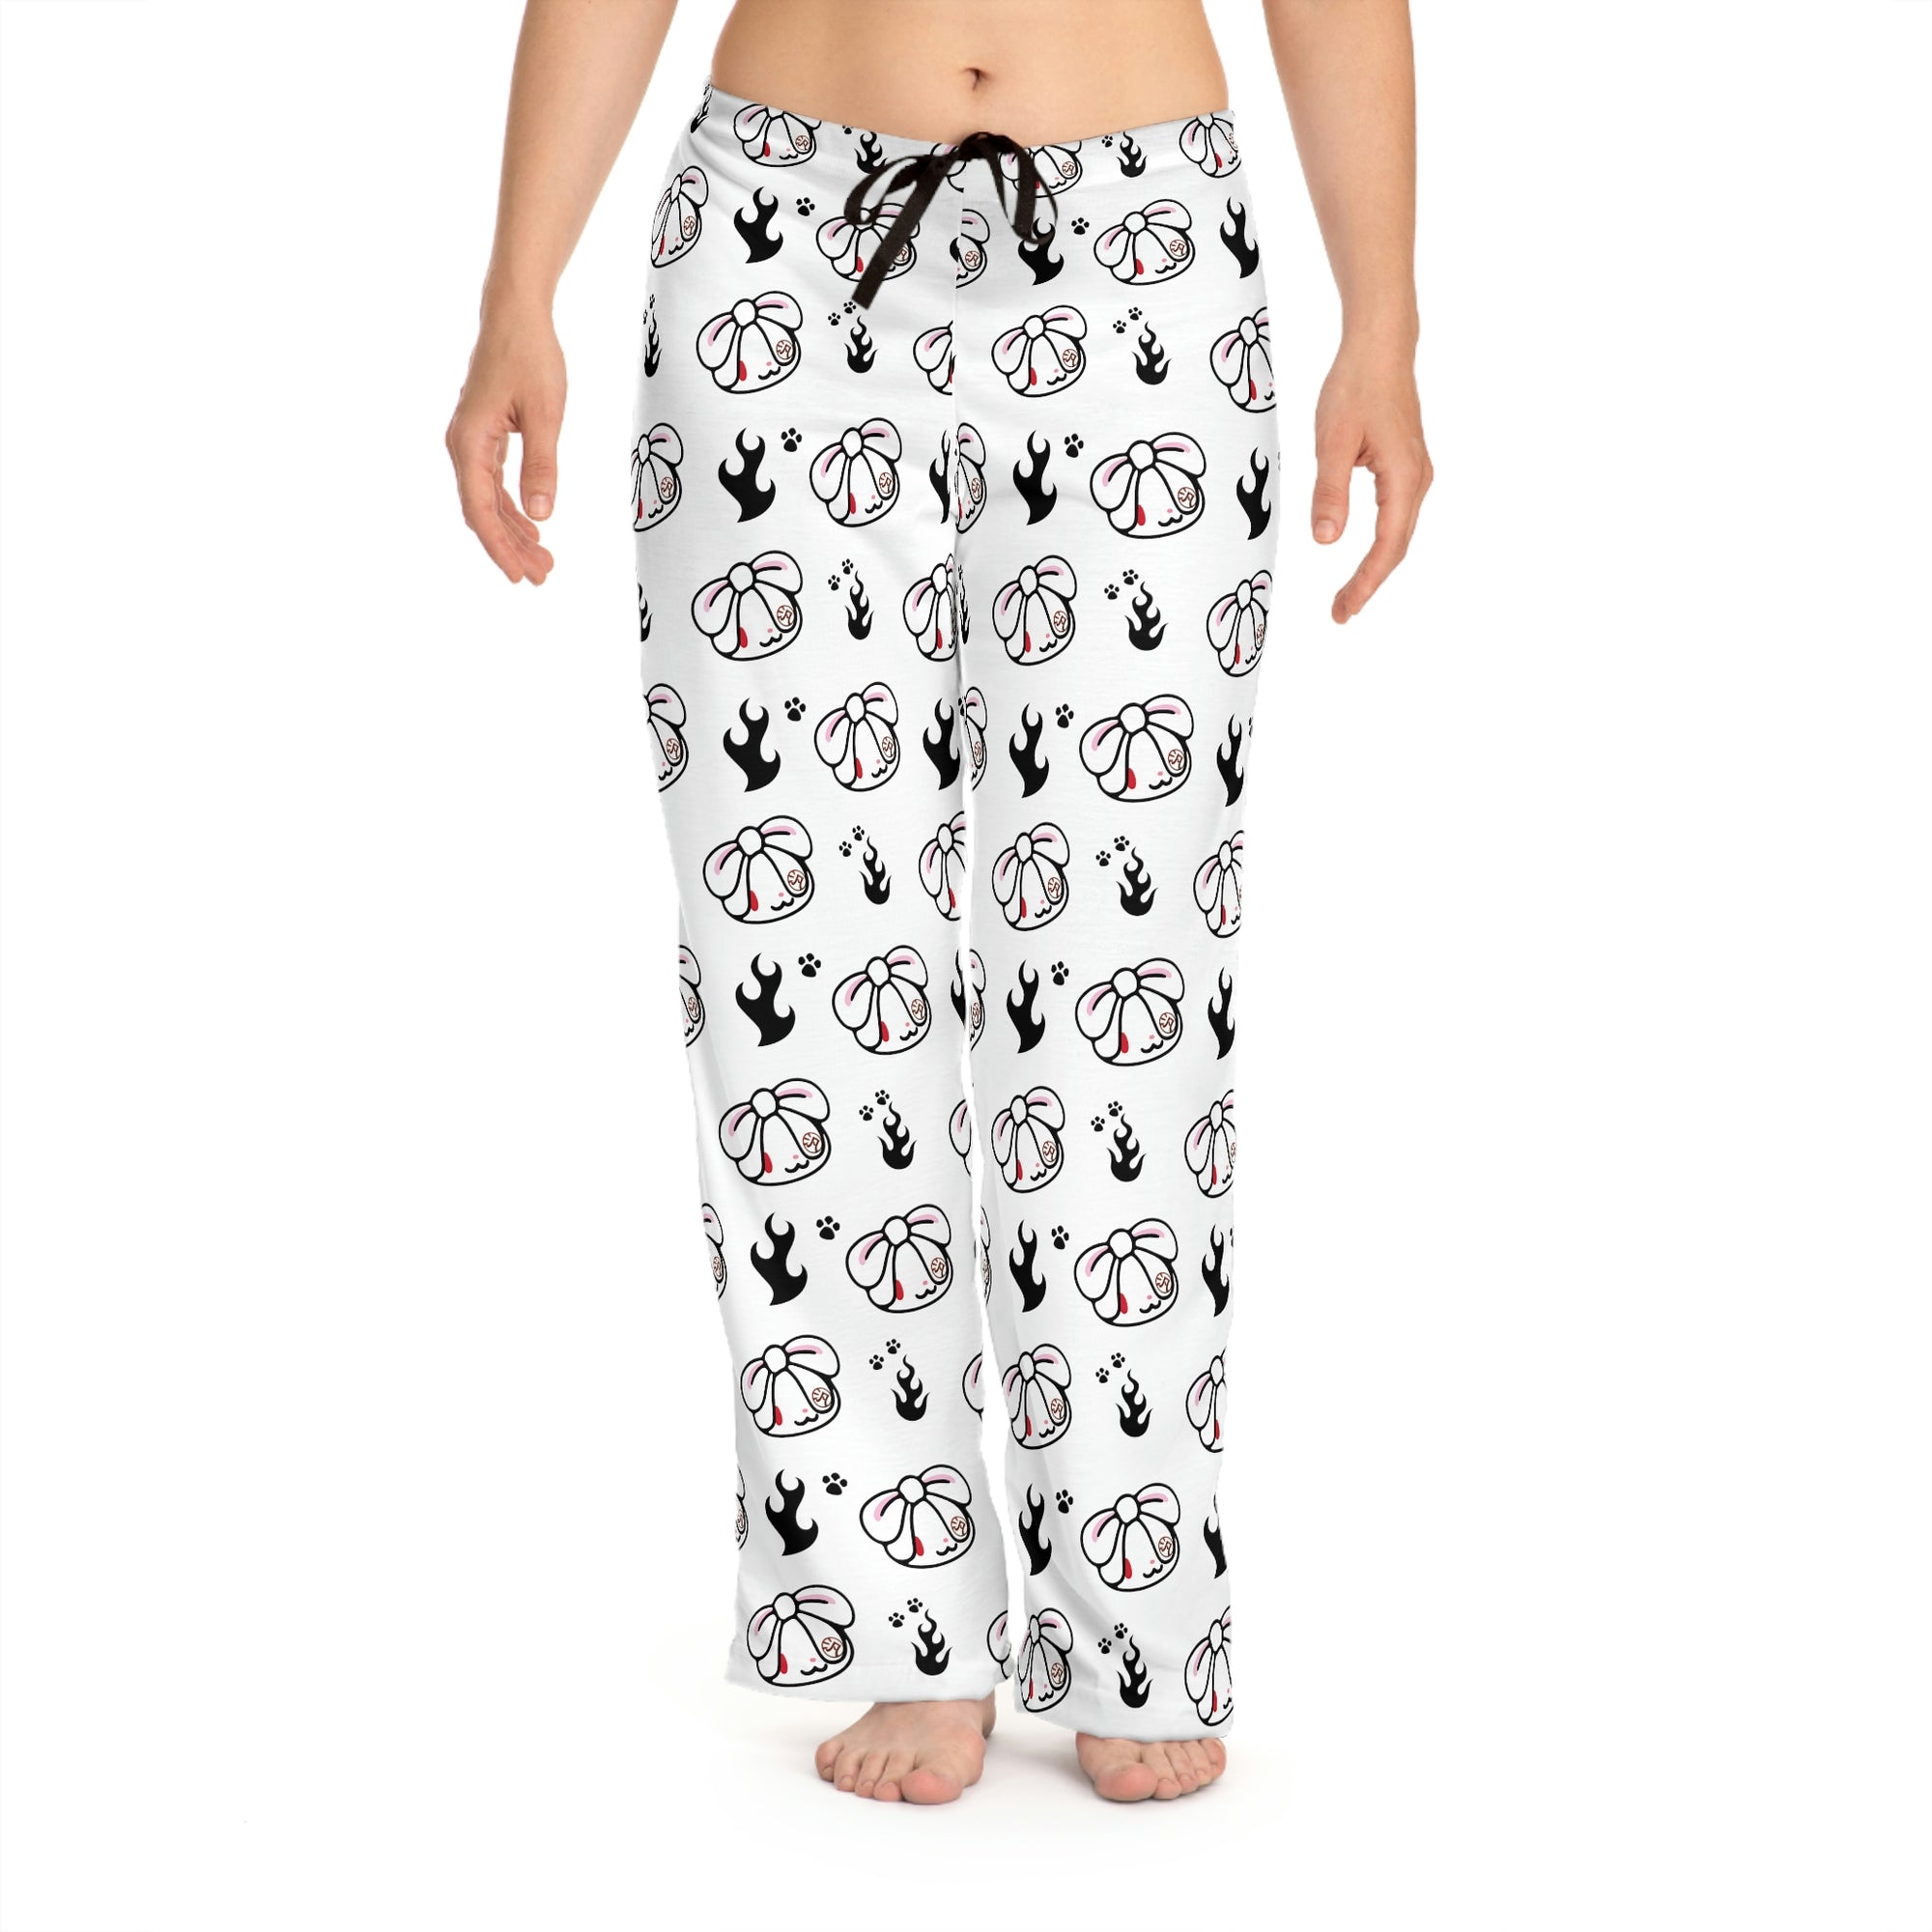 Walmart Dog Pajama Pants for Women